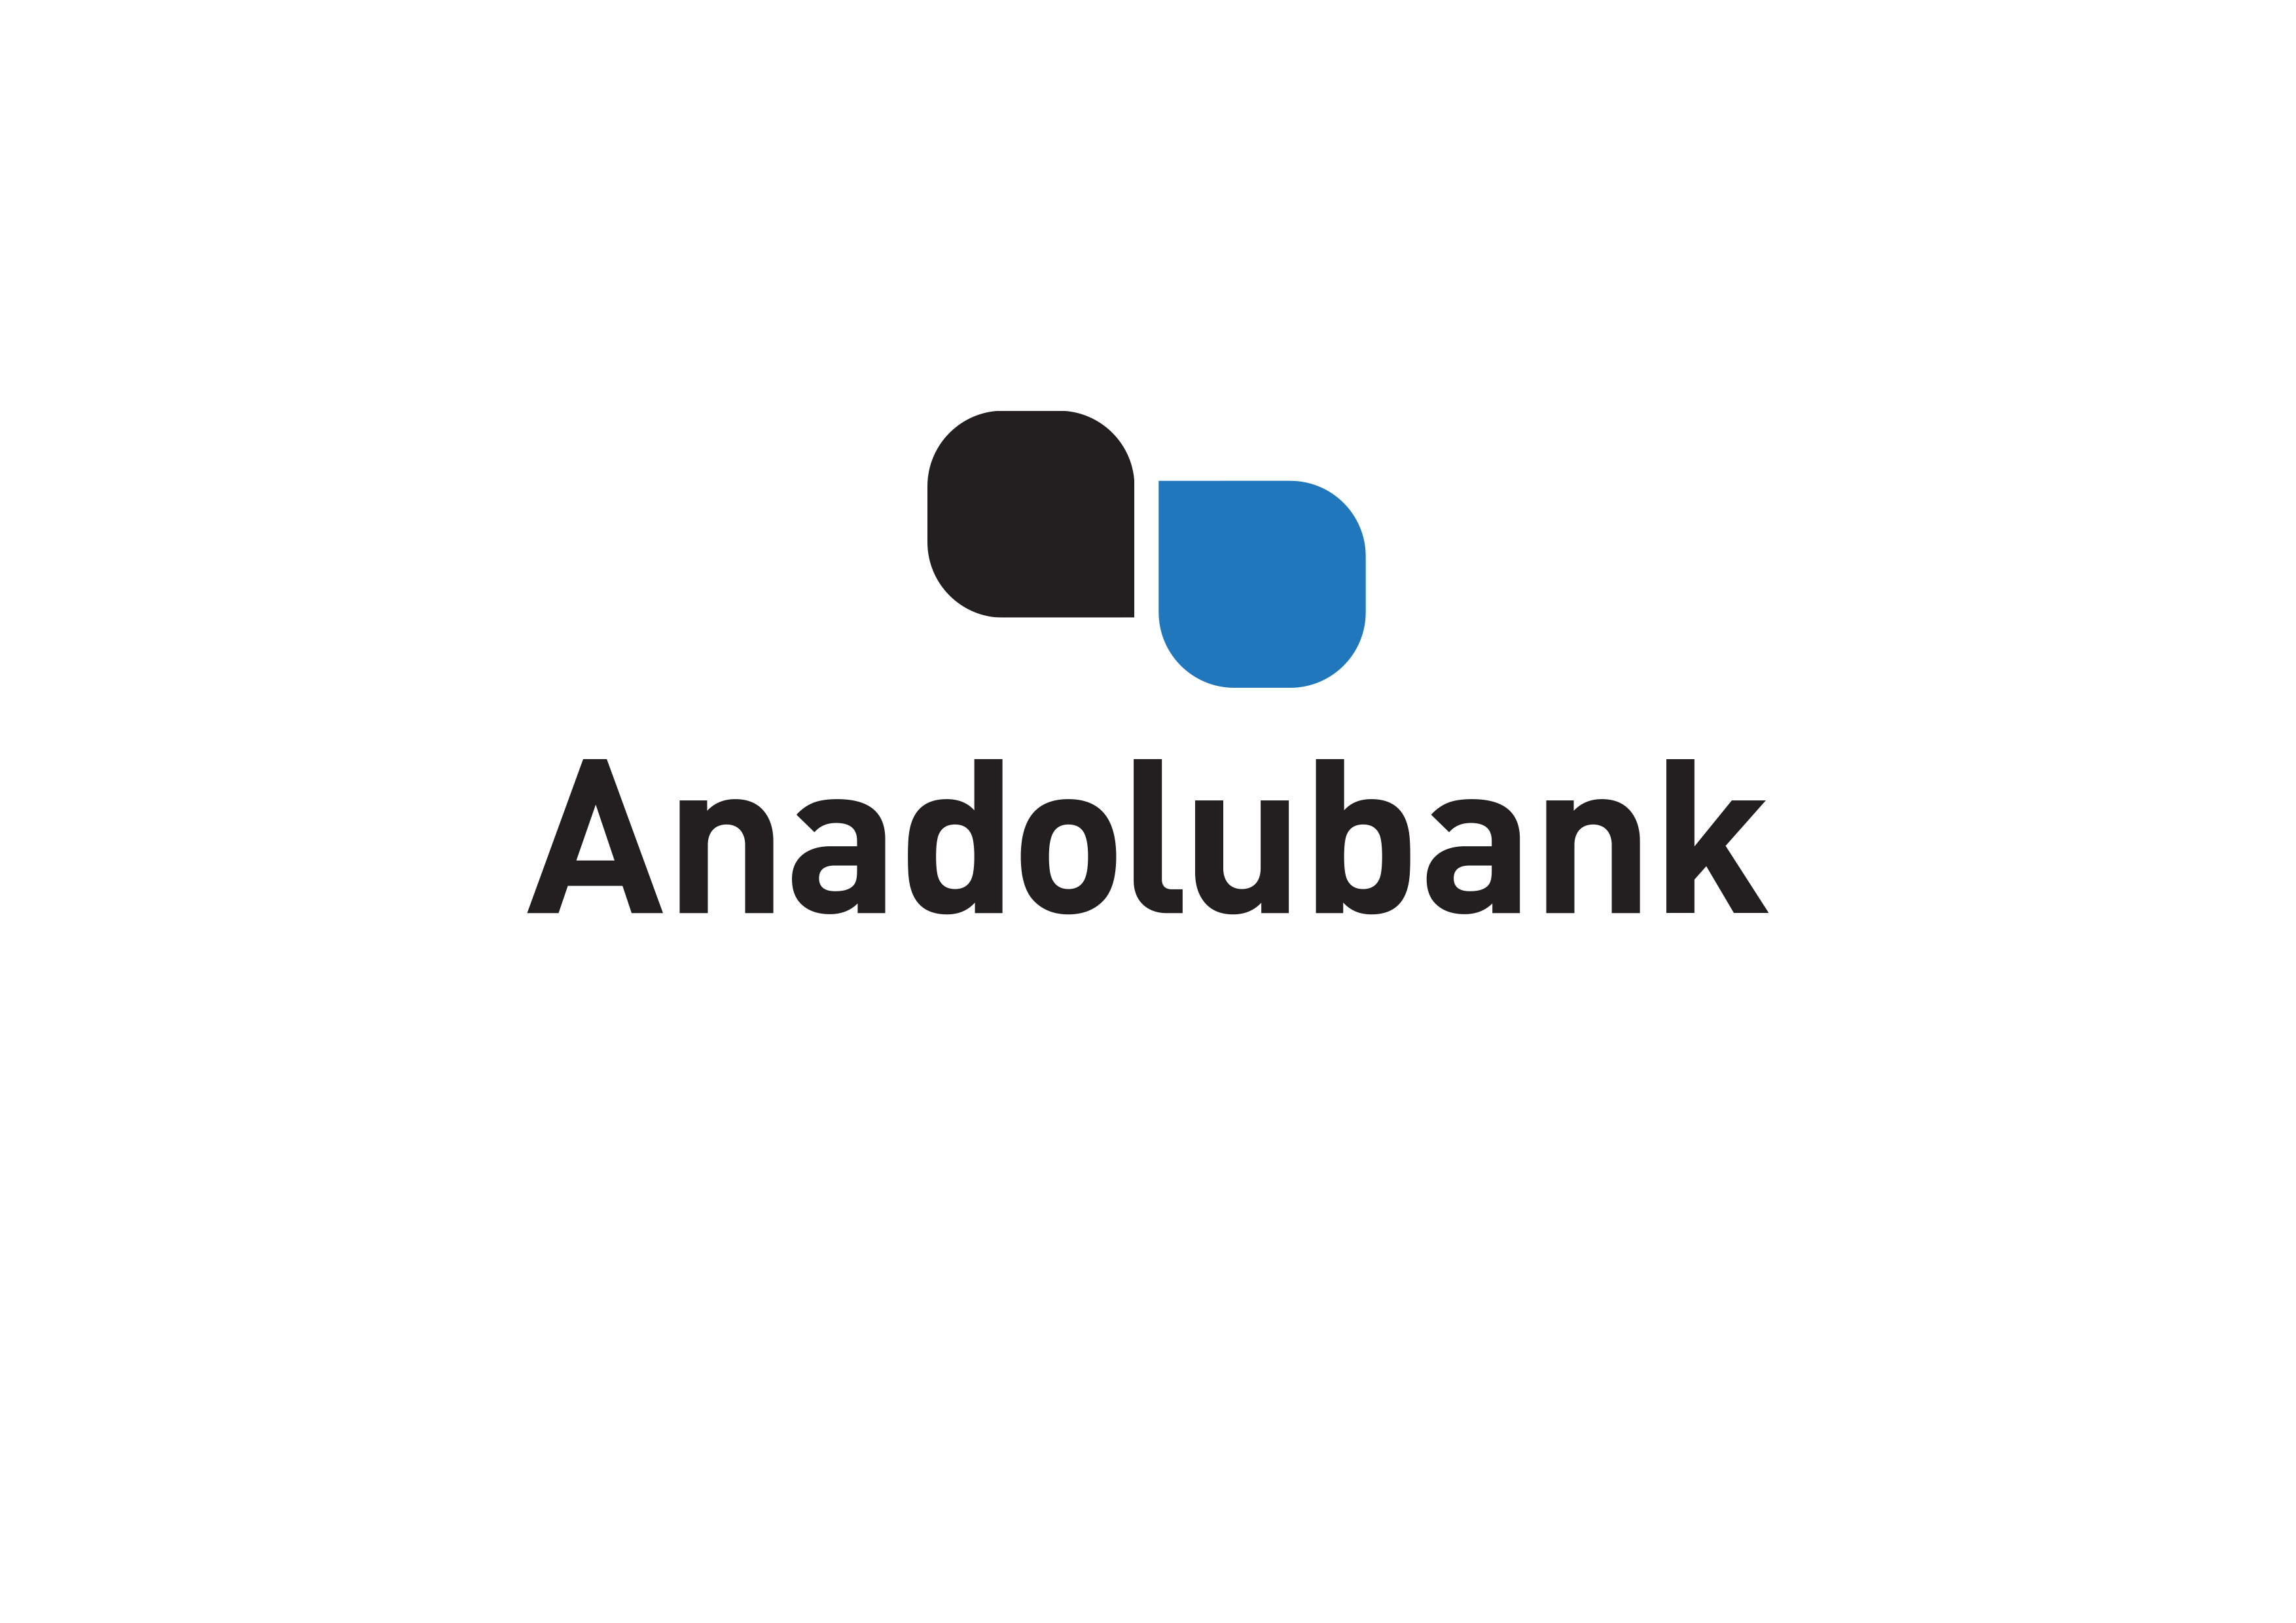 Anadolu bank